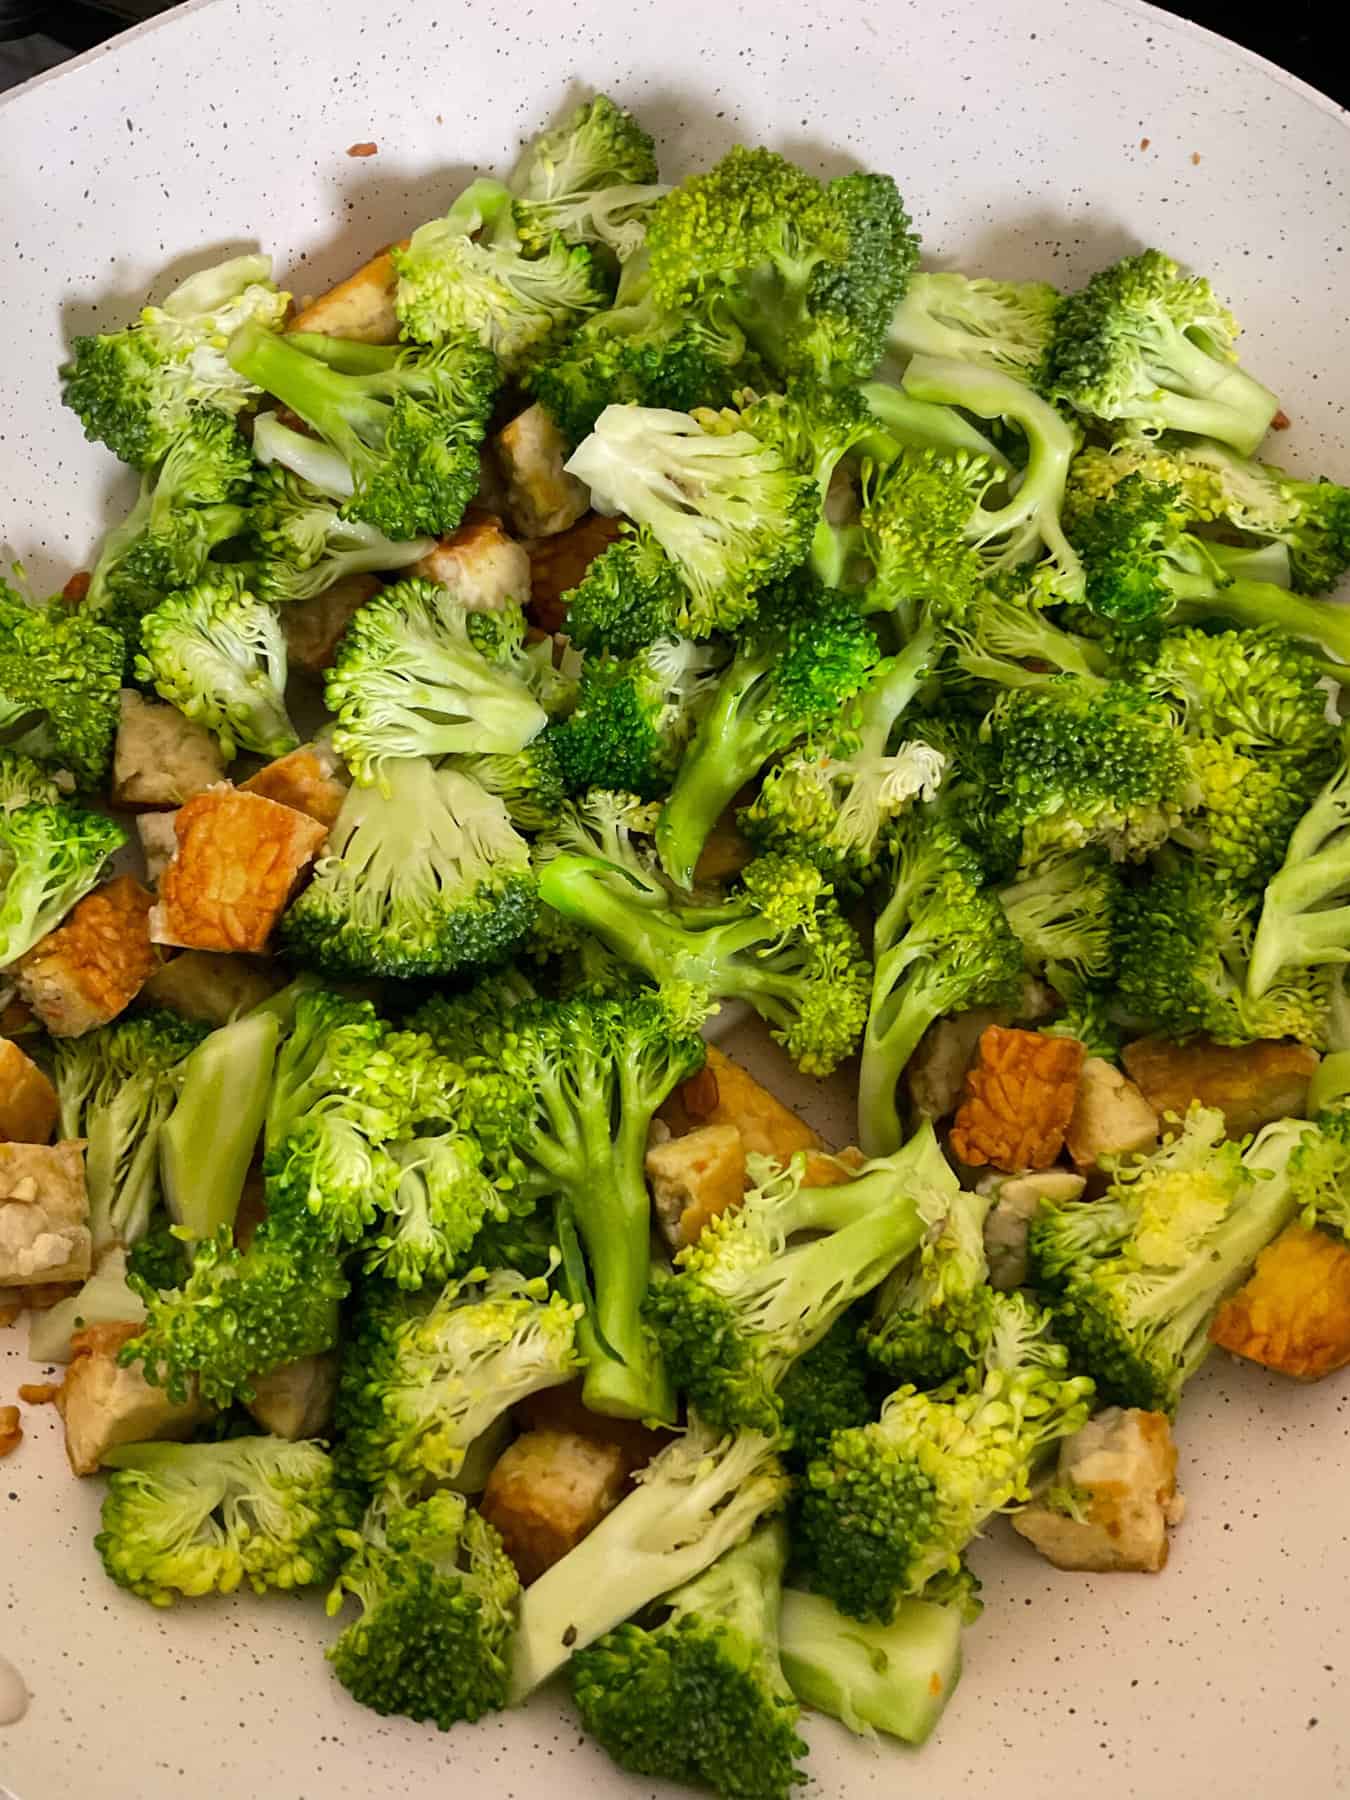 Broccoli and tempeh stir-frying in pan.